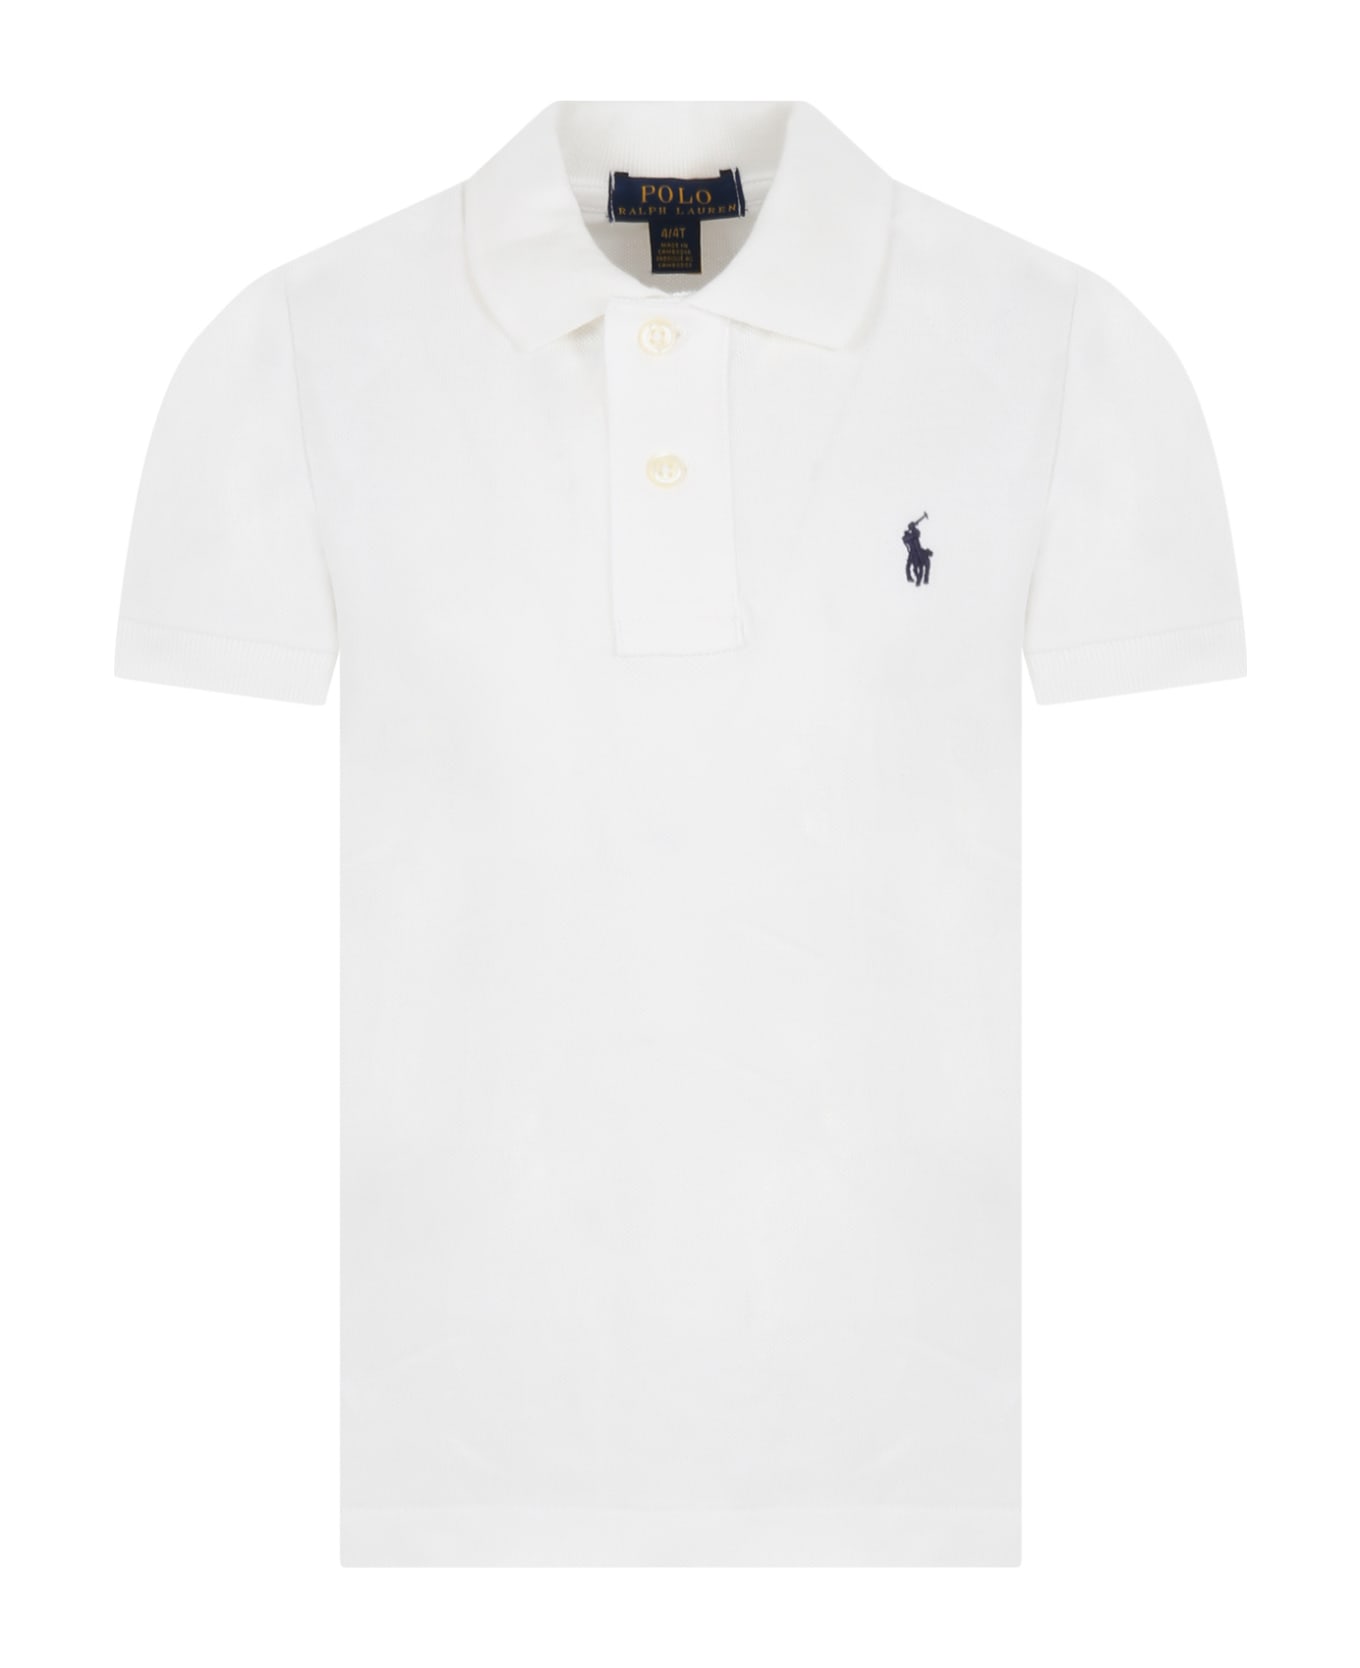 Ralph Lauren White Polo Shirt For Boy With Pony Logo - White